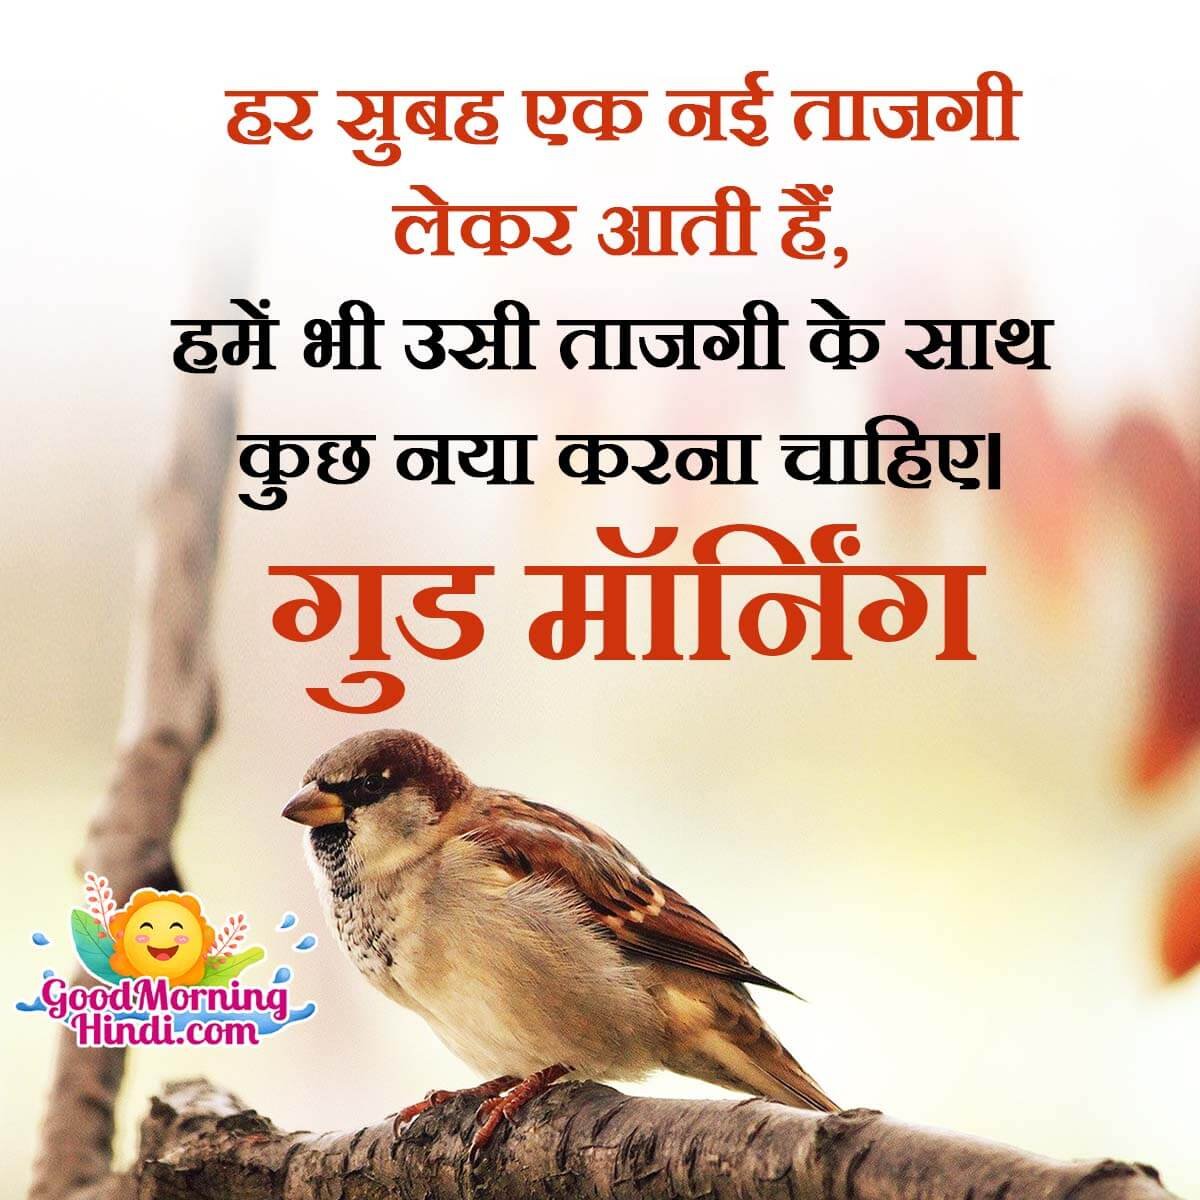 Top 999+ good morning motivational images in hindi – Amazing Collection good morning motivational images in hindi Full 4K